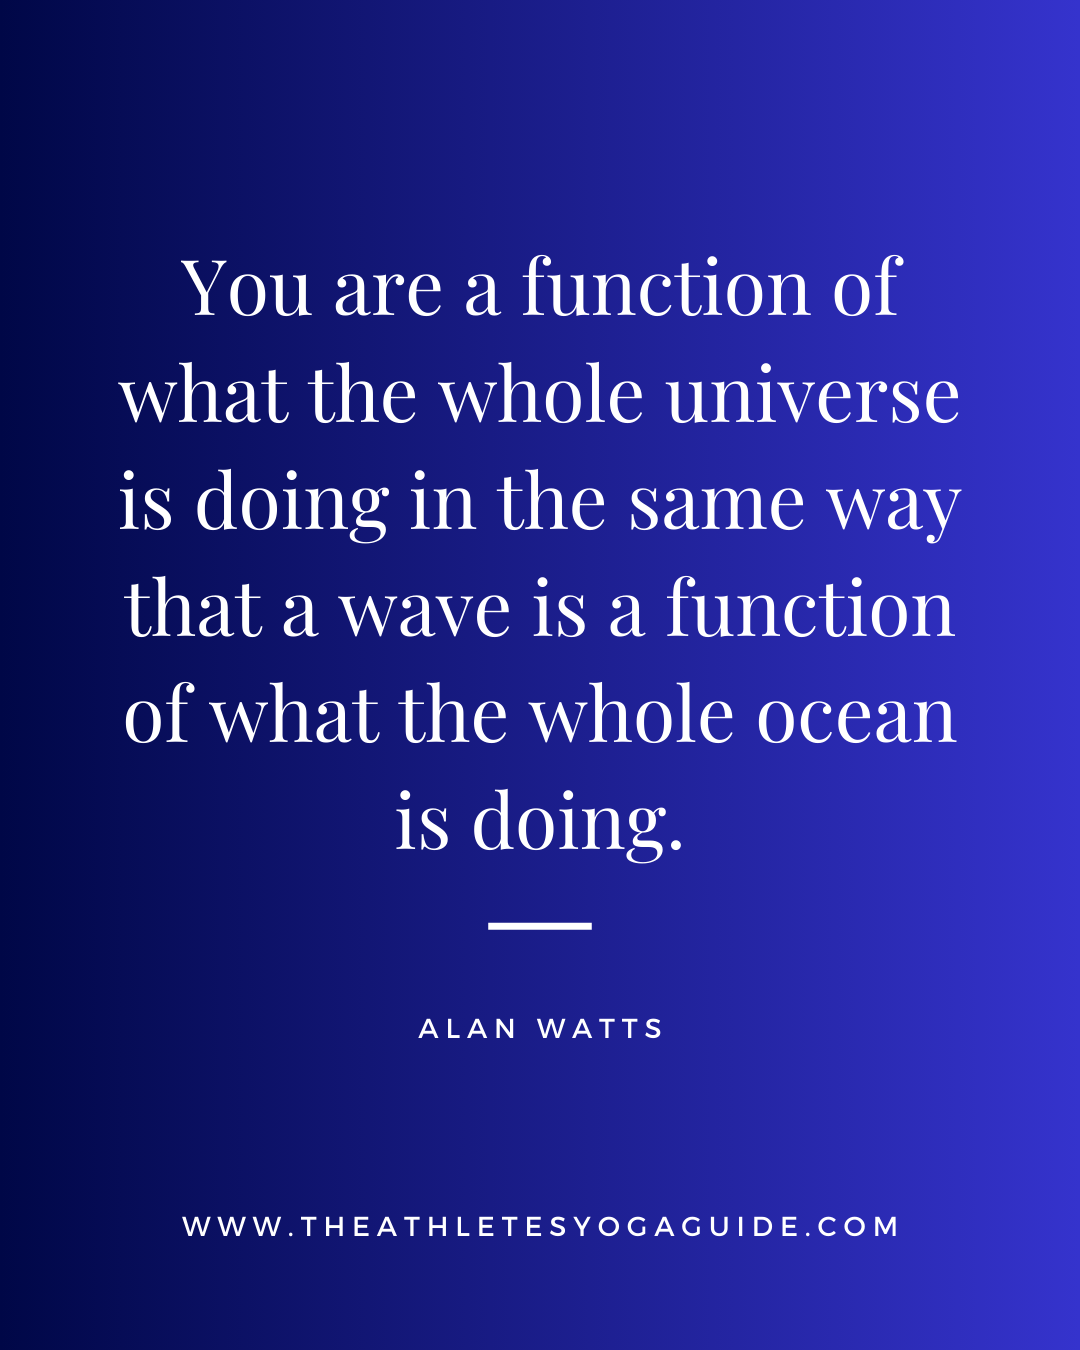 Alan Watts’ Teachings and Yoga